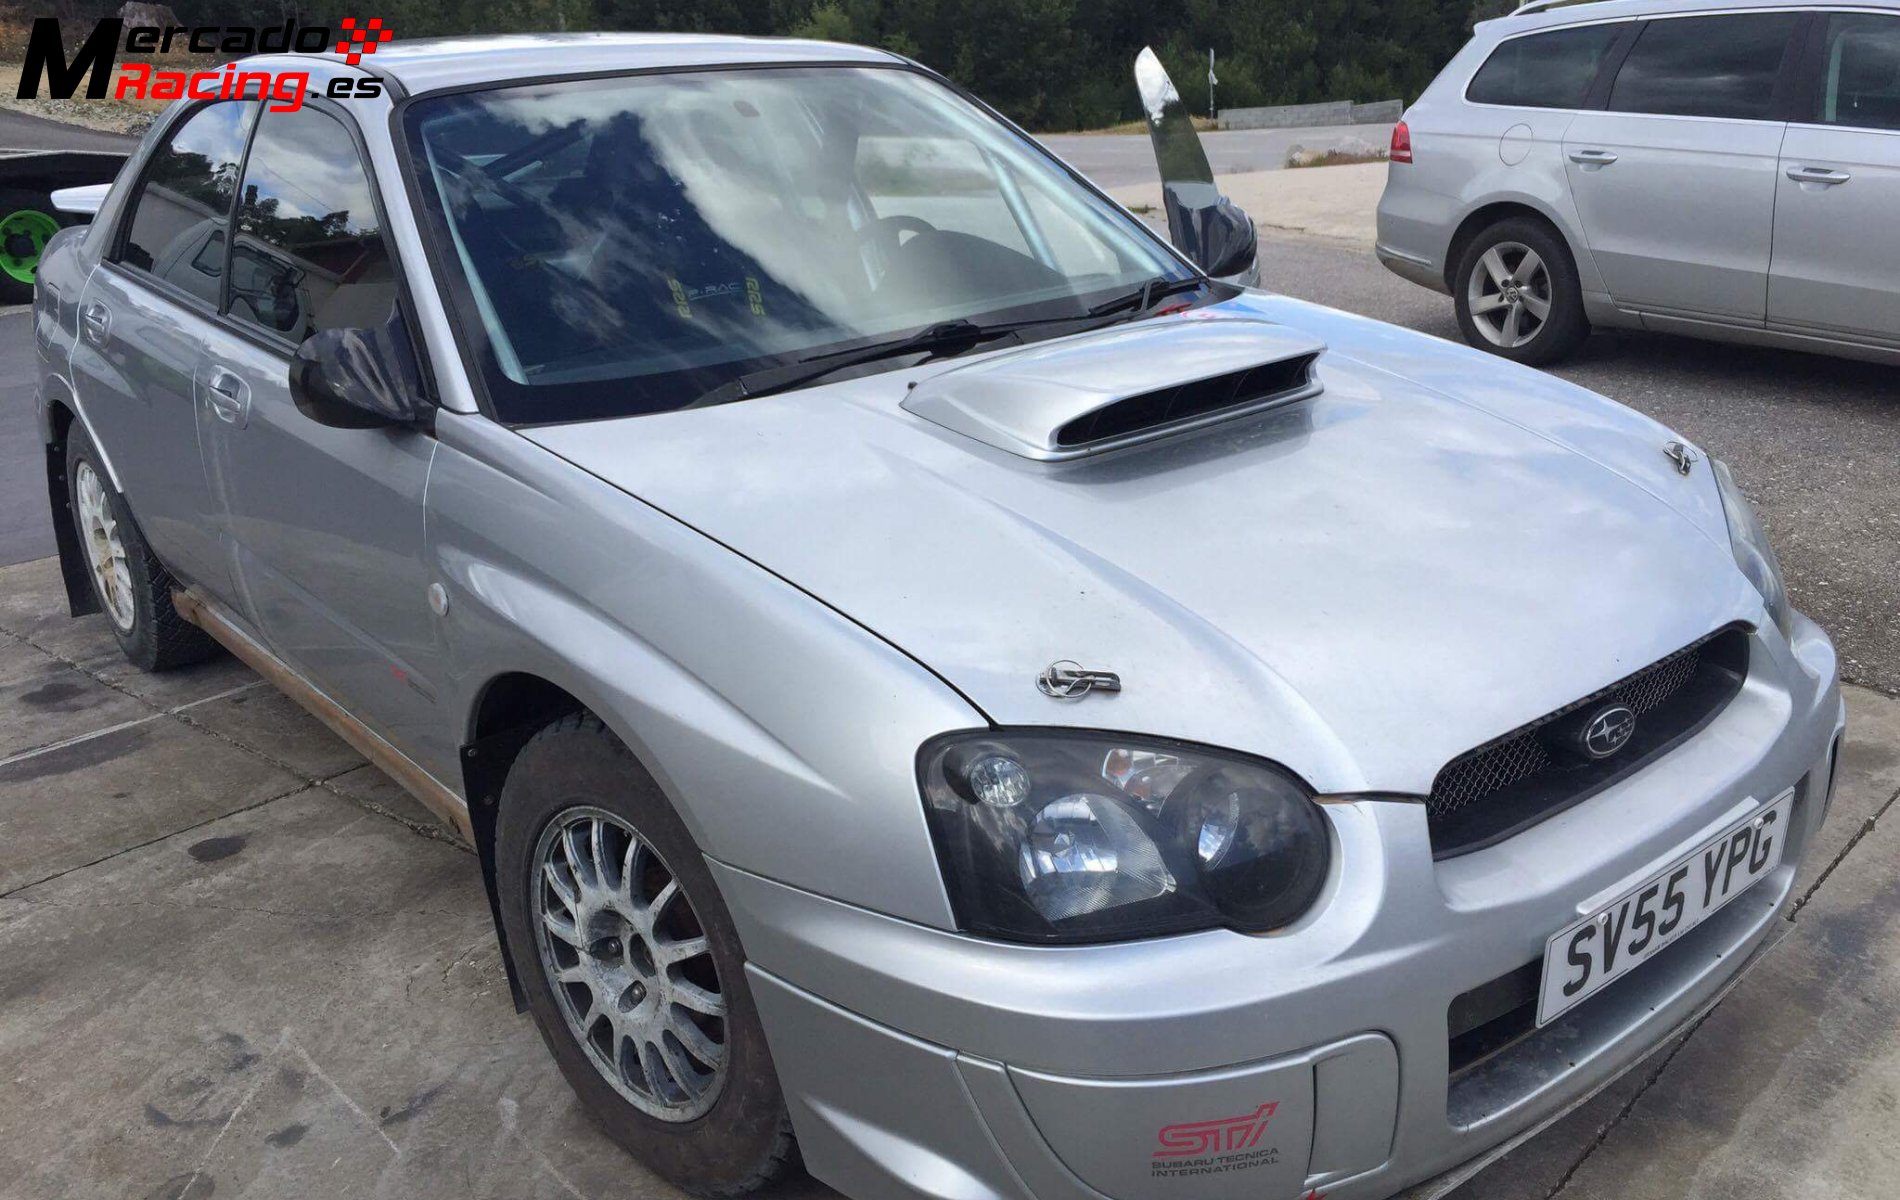 Subaru n11 sti rally car nuevo despiece